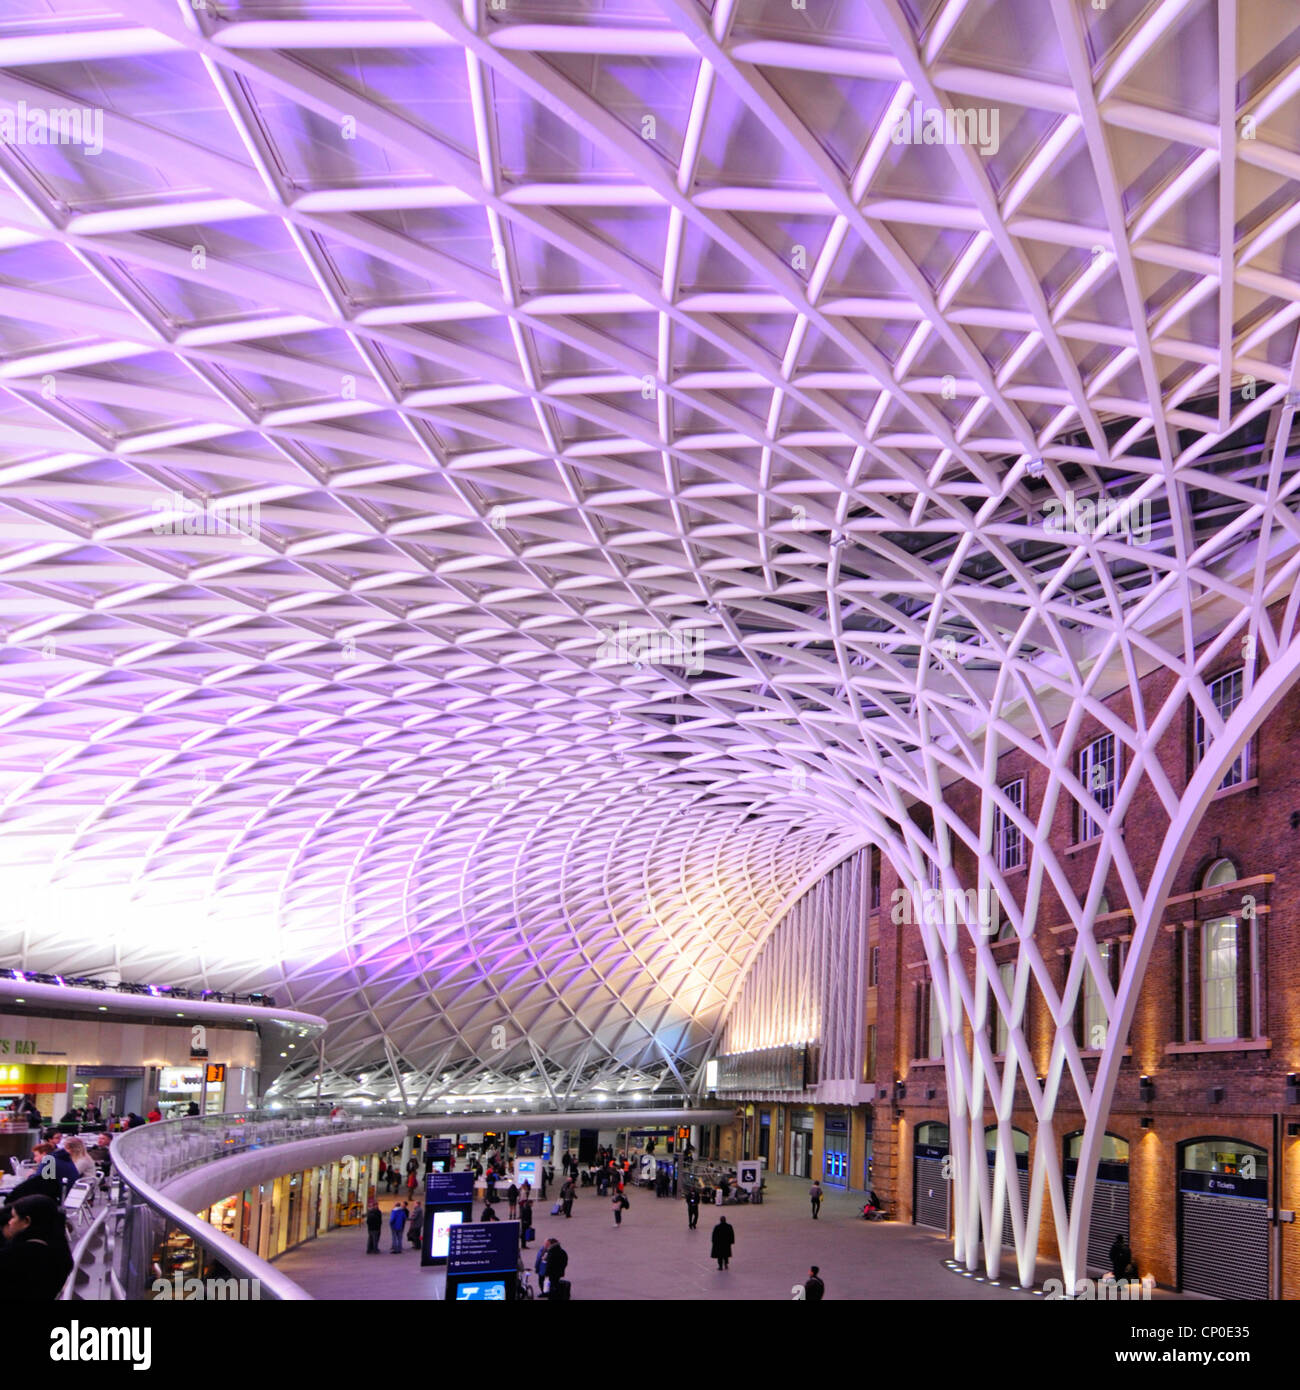 Nachts Kings Cross Bahnhof Abfahrt Konkurs mit Zwischengeschoss & gemusterter futuristisch beleuchteten Deckenstruktur London England Stockfoto